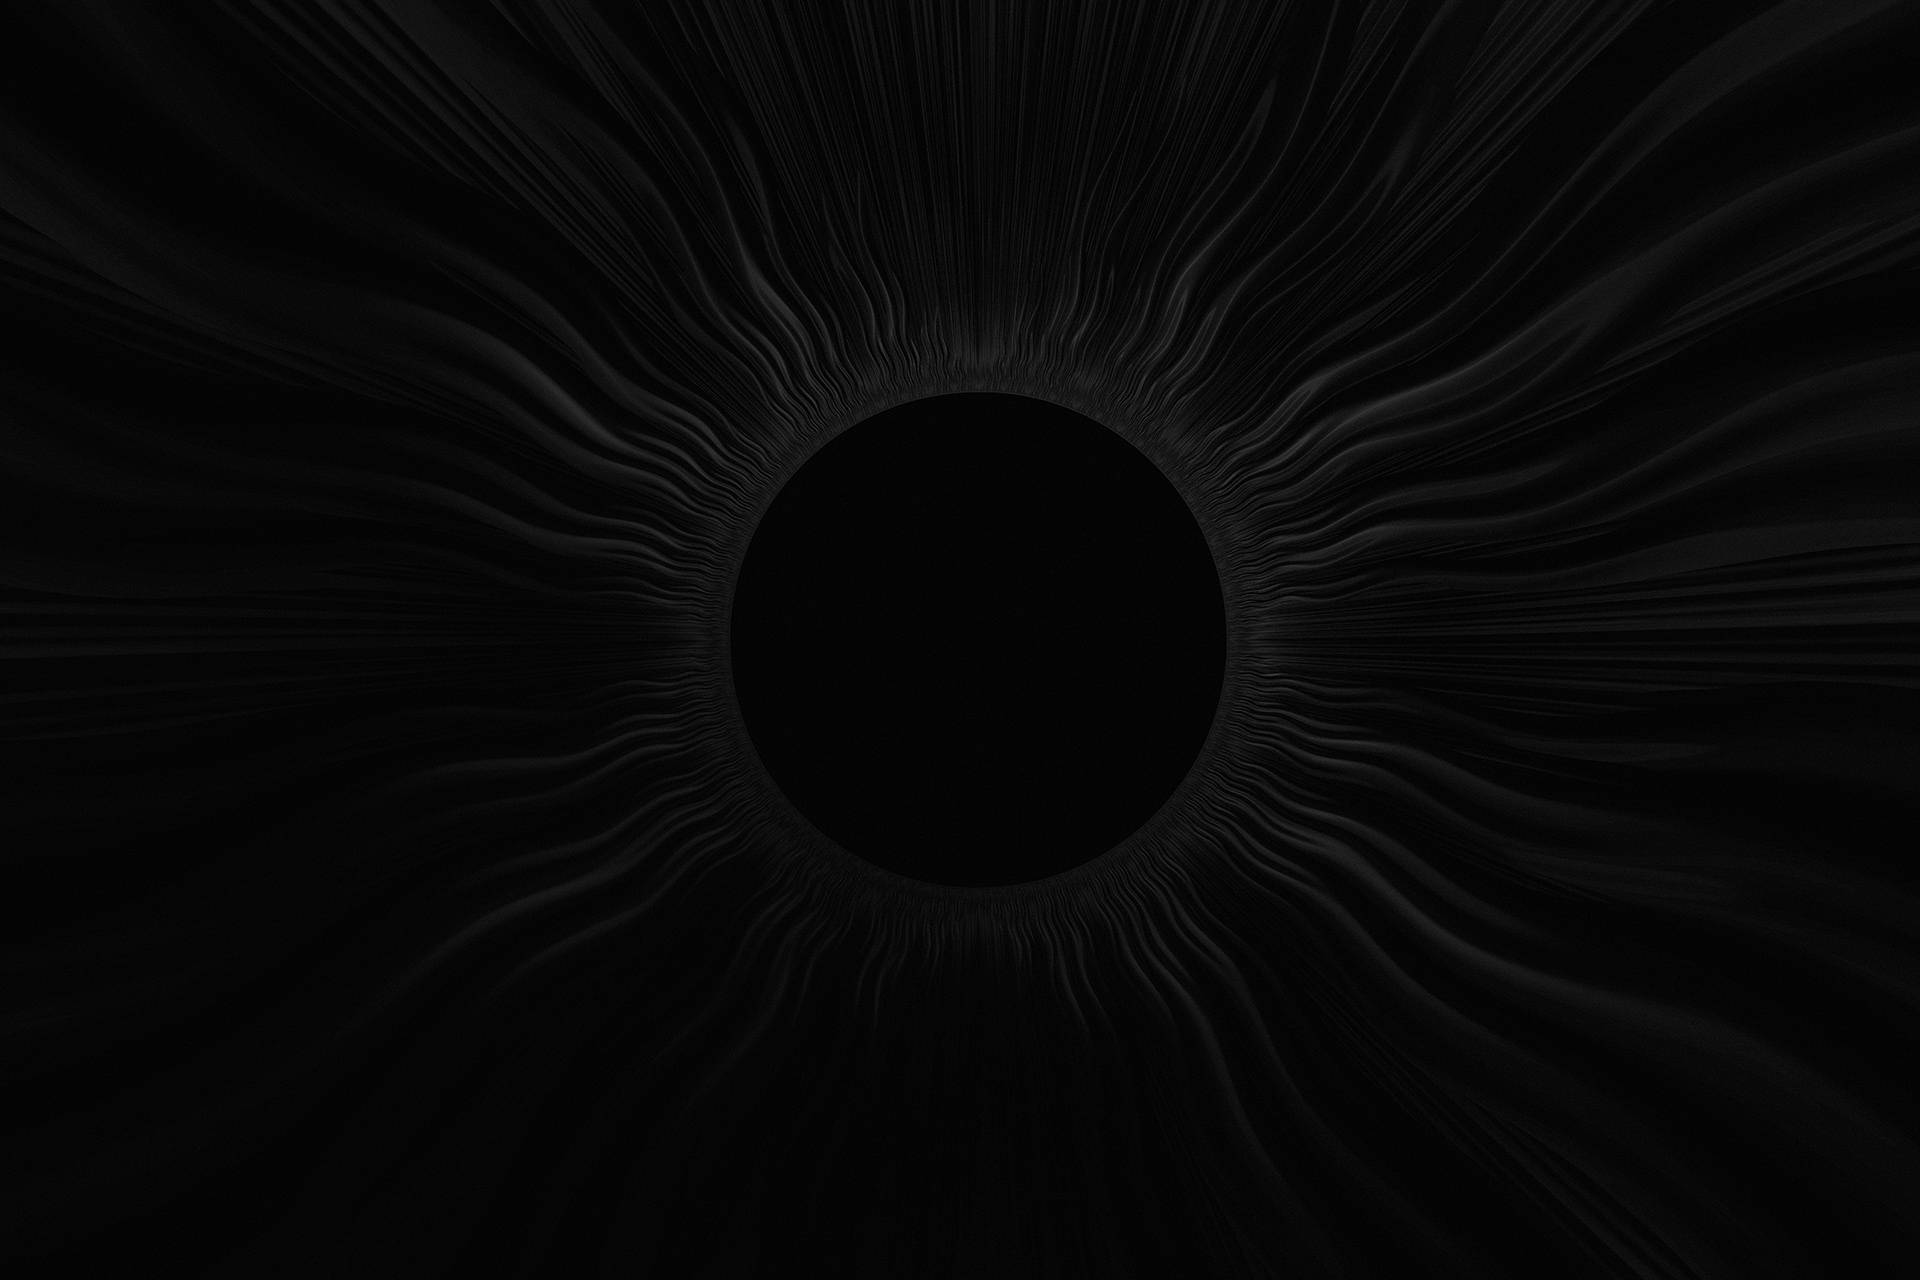 Ominous Black Vortex Abstract Illustration